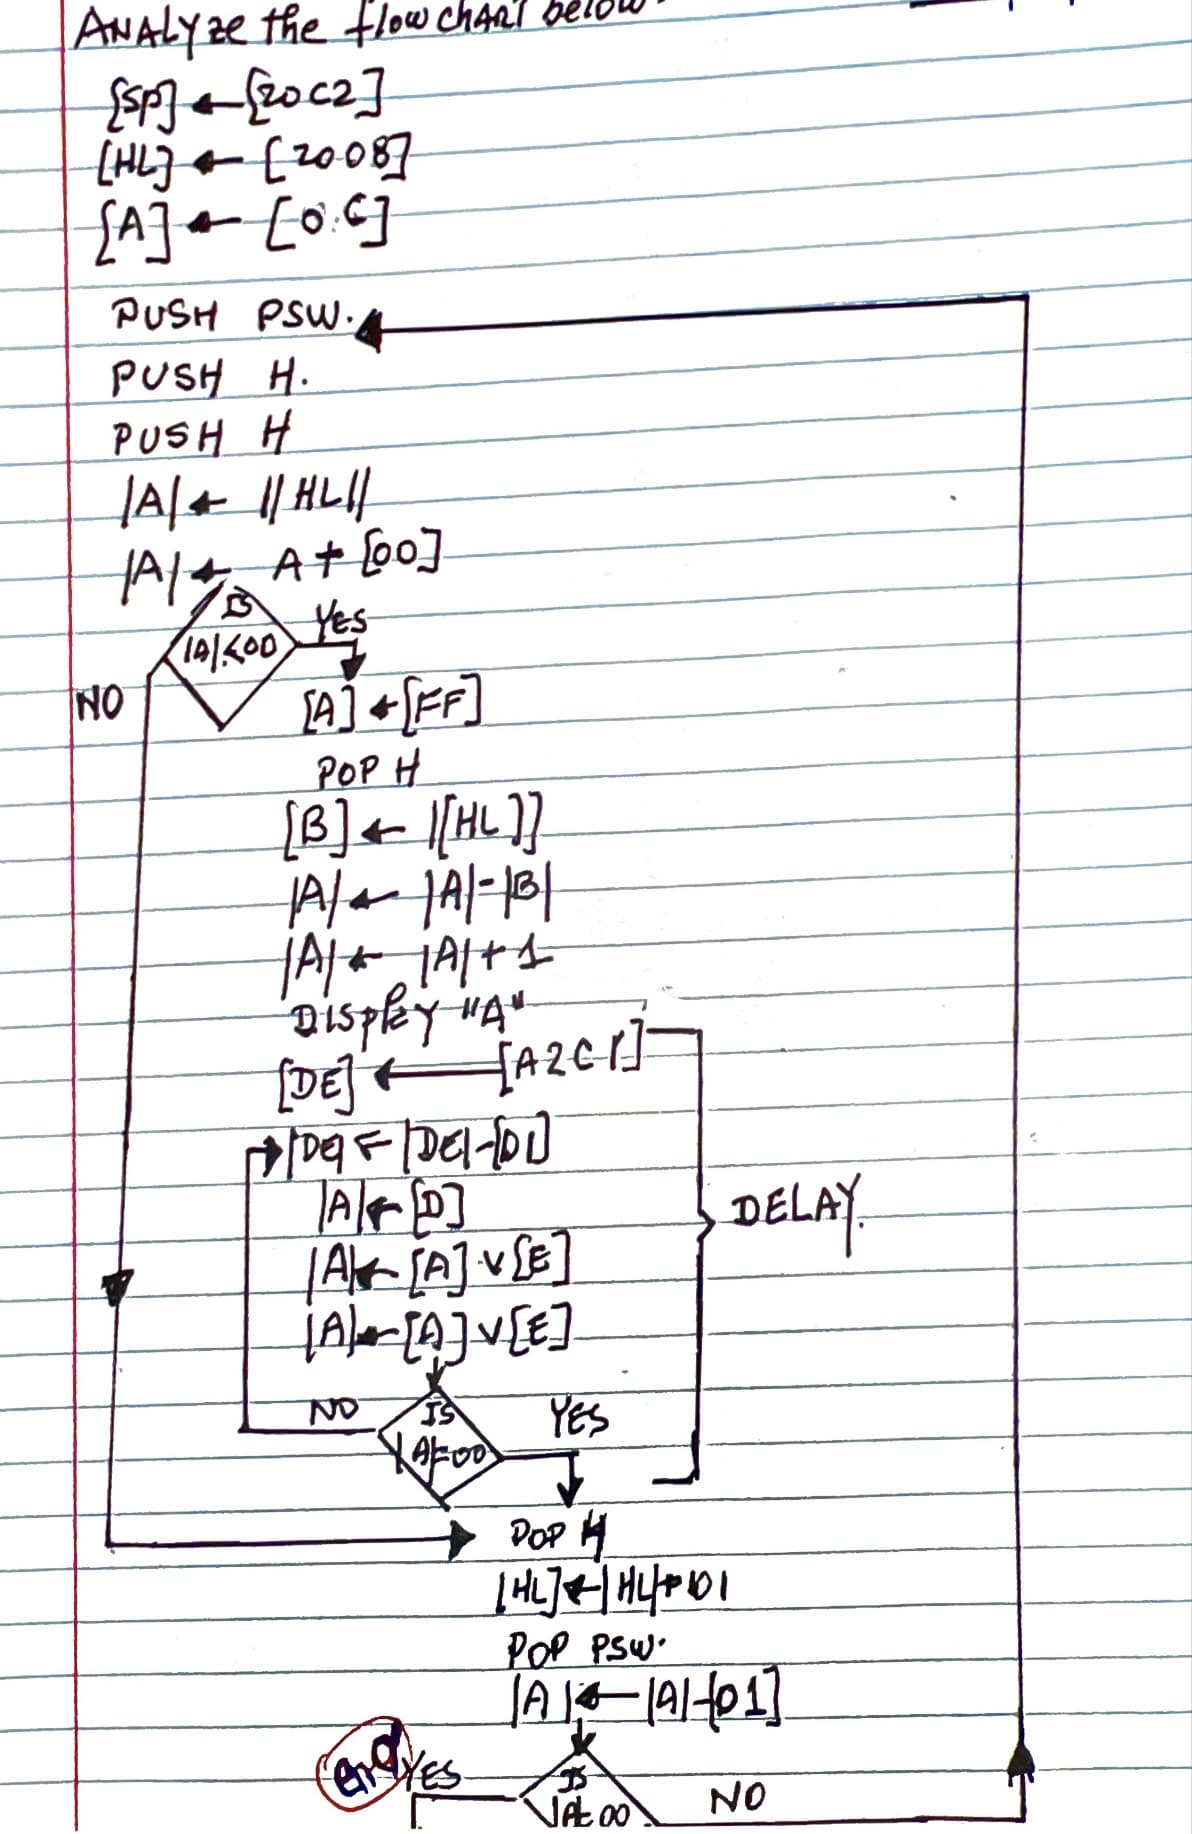 ANALYze the flow chAR! bell
[SP] [2002]
NO
[HL] [2008]
[A] + [OC]
PUSH PSW.,
PUSH H.
PUSH H
|A| + || HL||
(A/+ A+ [00]
14/200
YES
[A][FF]
POP H
[B] ← I[HL]]
A/2|A|-|13|
/A/ |A|+1
"DISPRY "A"
[A2C1]
[DE]
[1/09/F/DE1-101]
A/F [D]
[AK [A] V[E]
[A] [A] V[E]
NO
14:00
engyes
YES
DOP H
[HL] |H47101
POP PSW
•DELAY.
A 19-01]
VALoo
NO